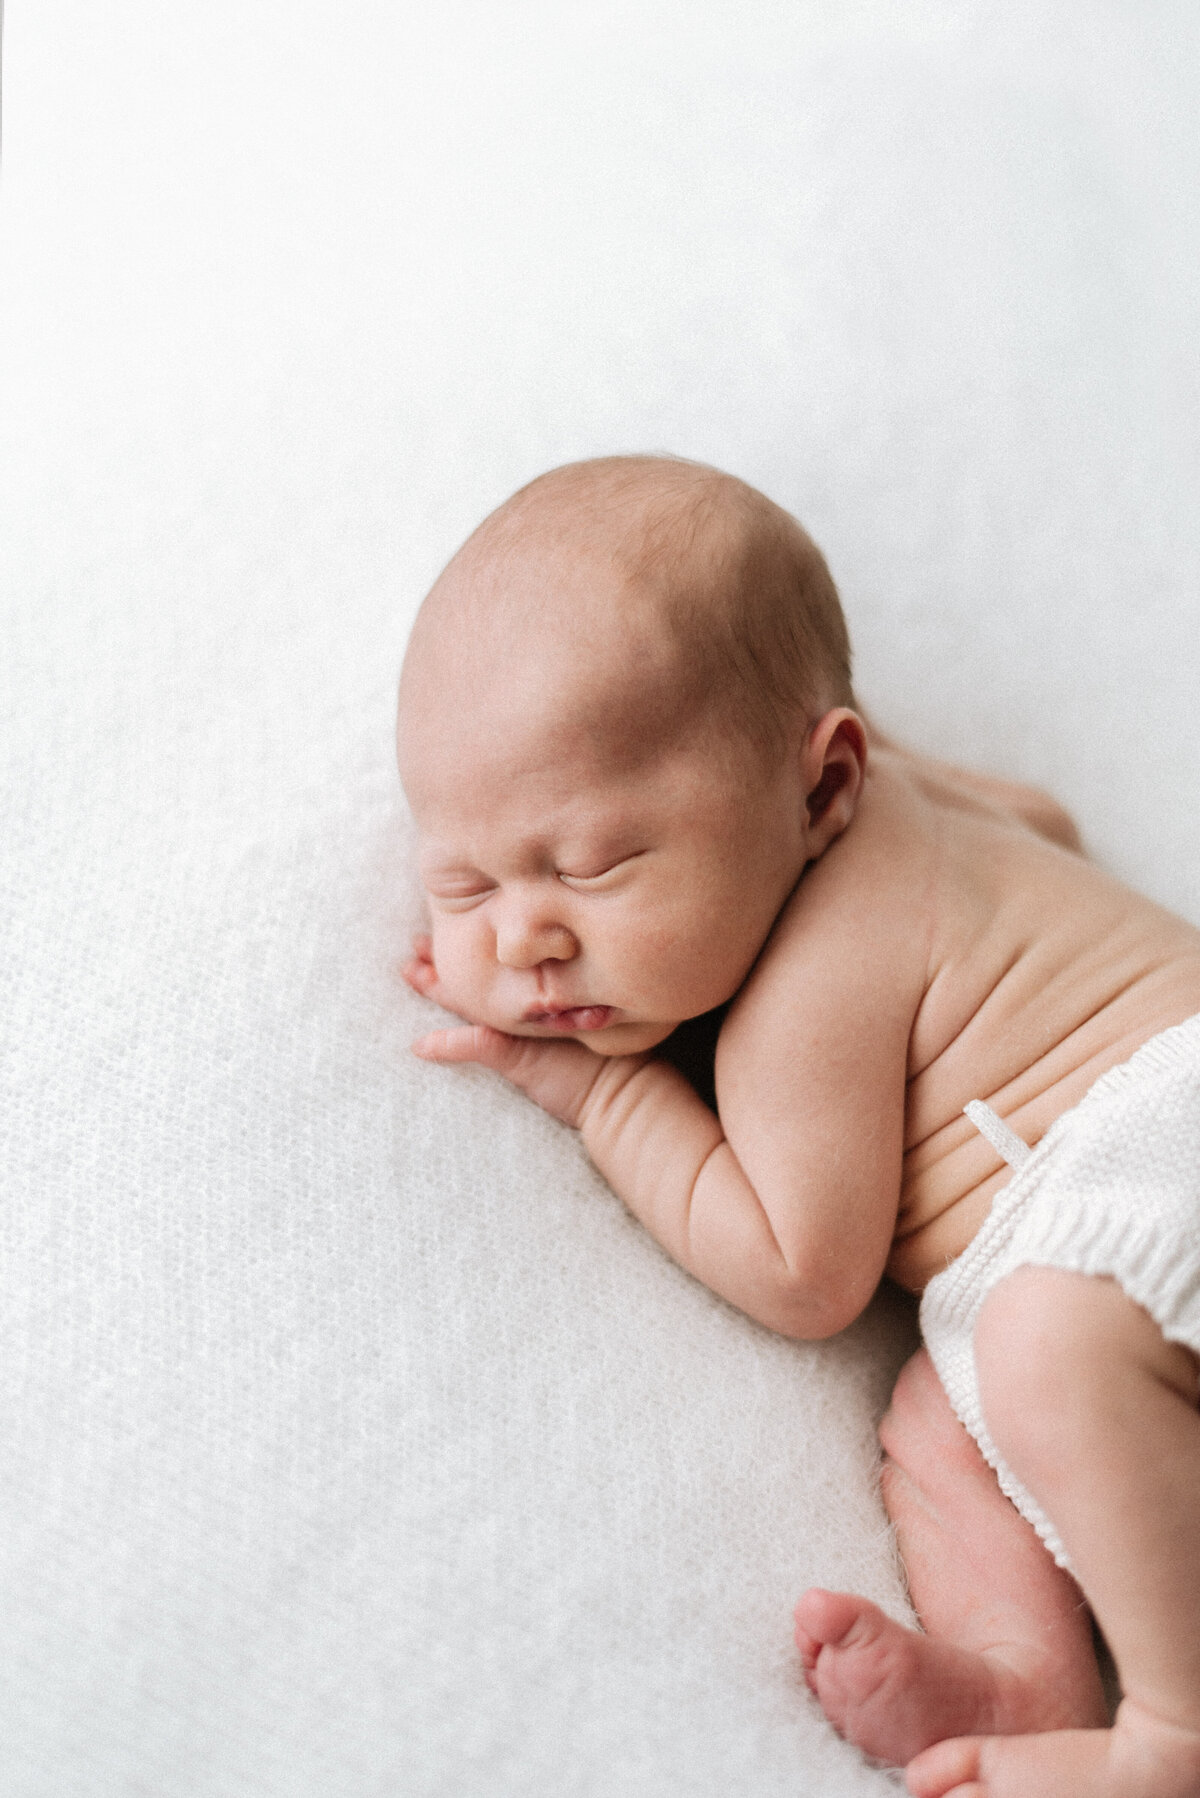 Baby boy sleeping on a white blanket at newborn photoshoot in Billingshurst